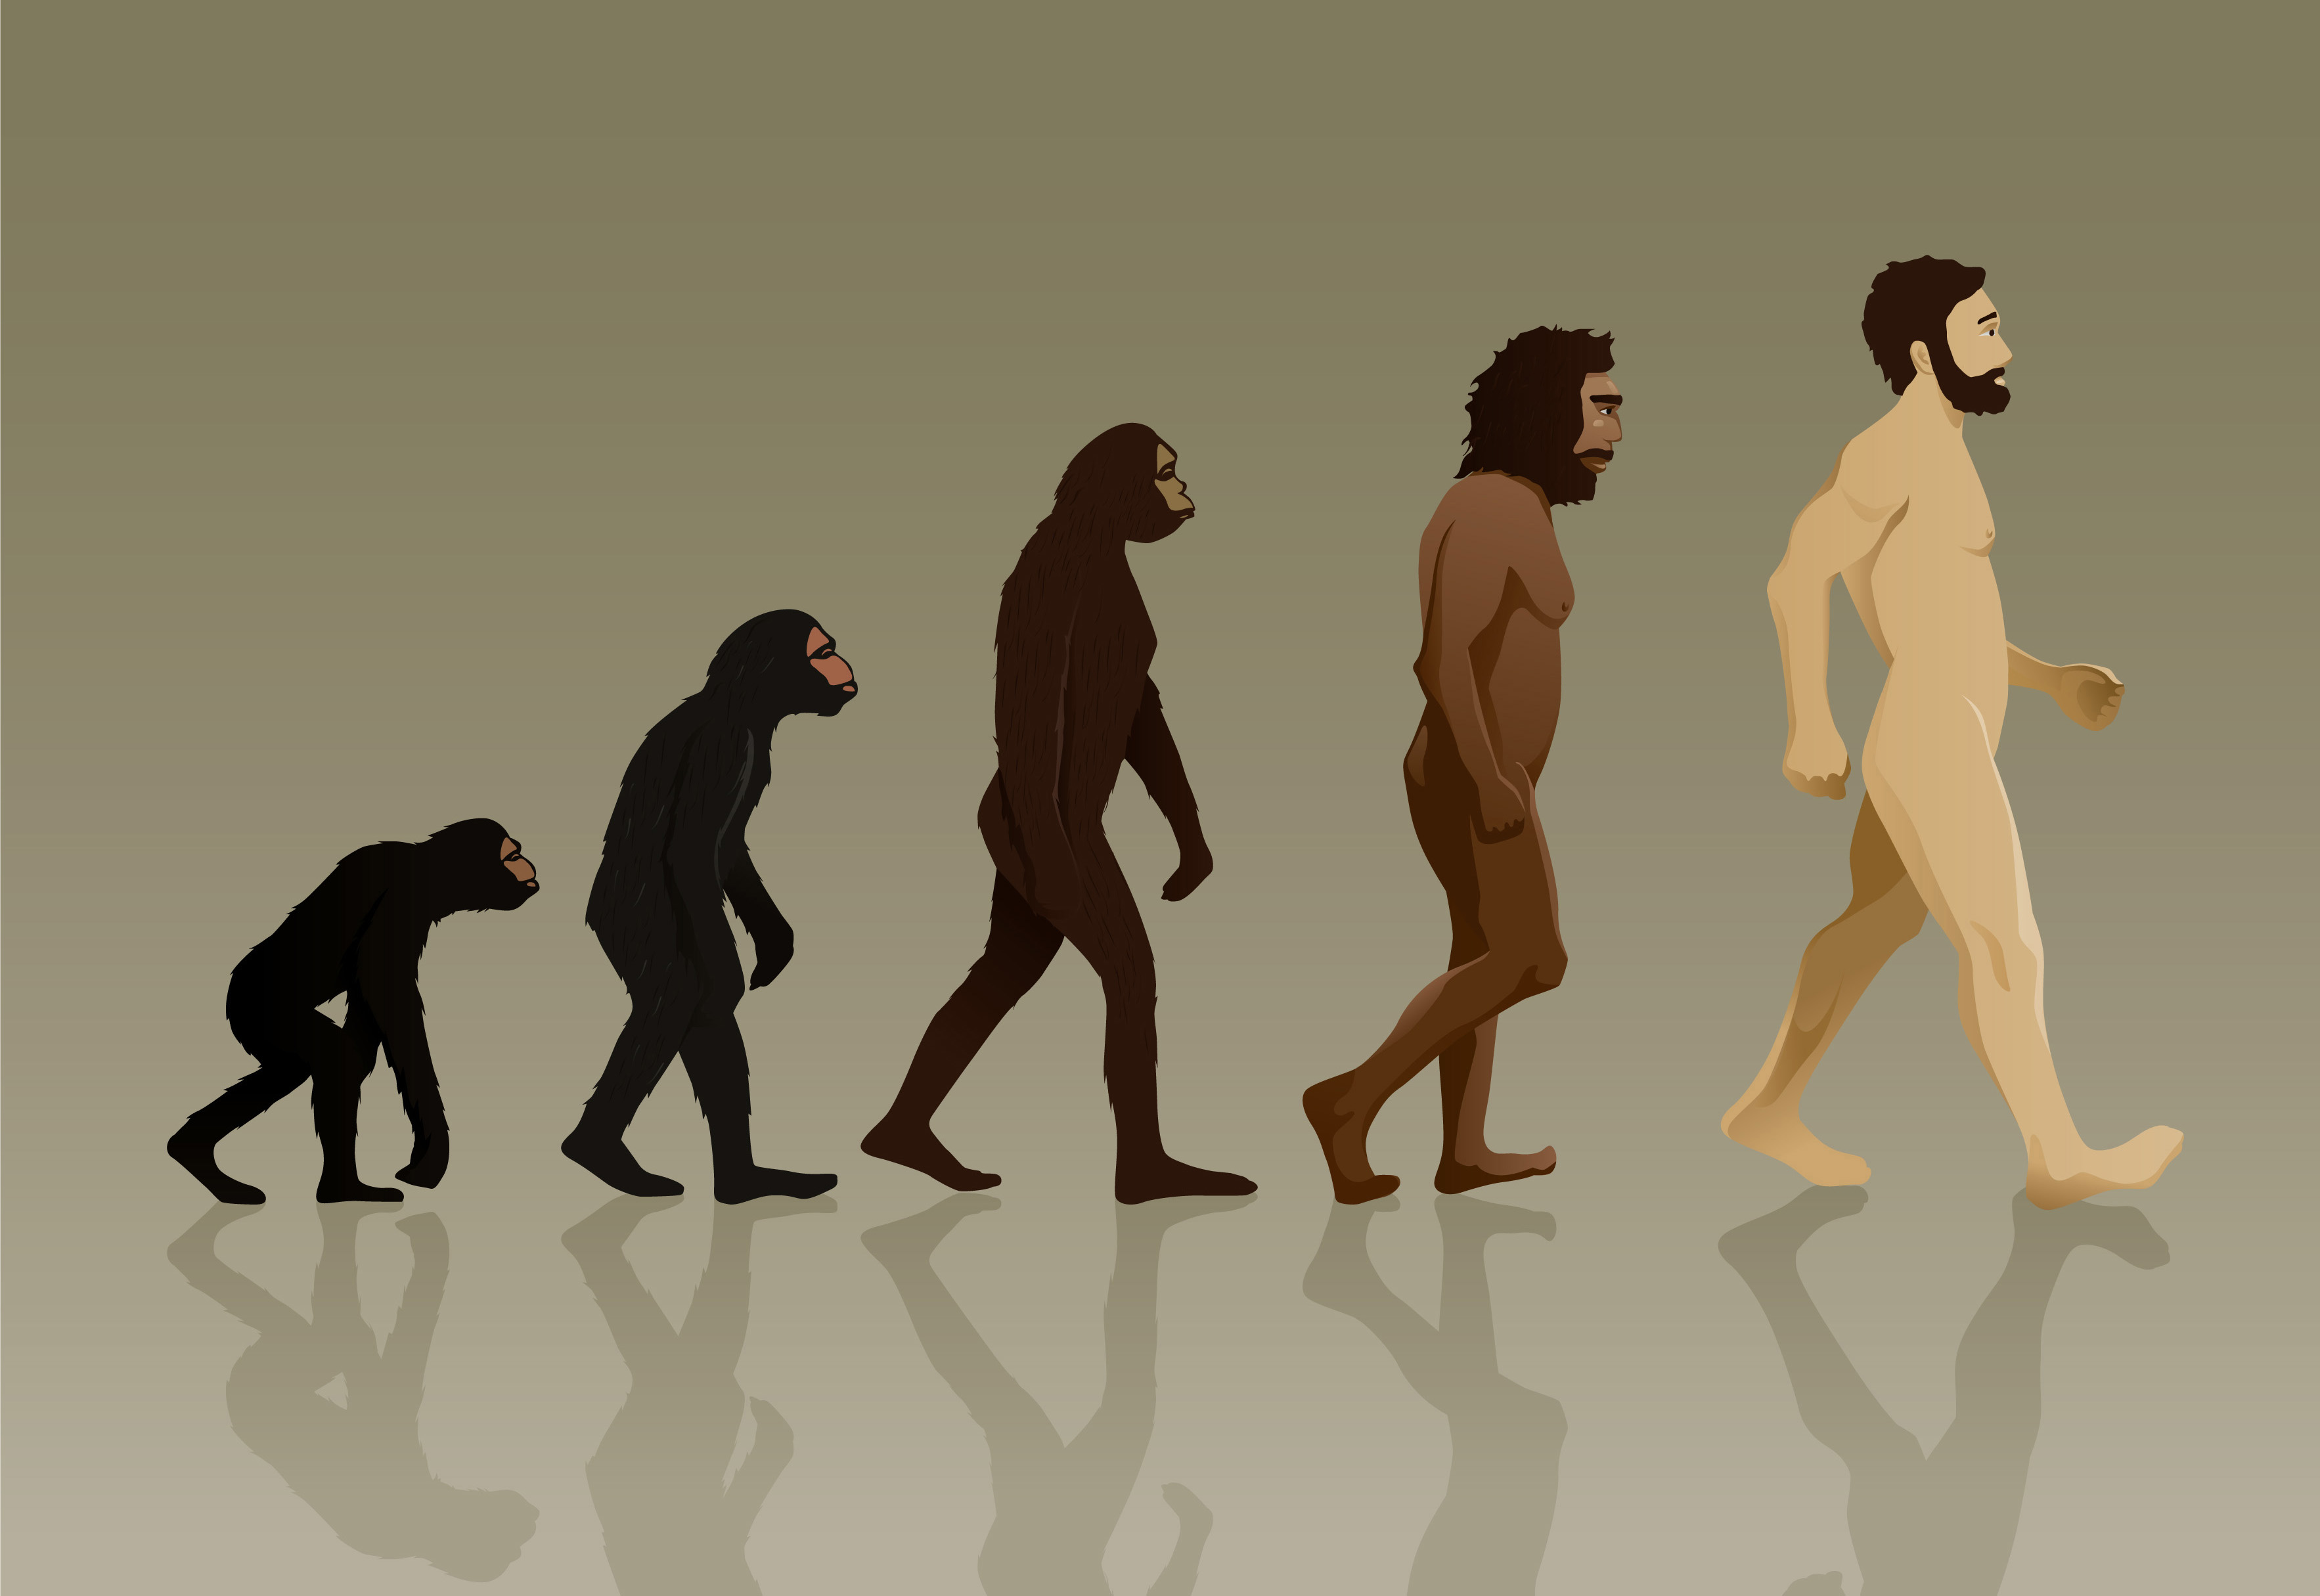 Процесс превращения человека в обезьяну. Эволюция Дарвин хомо. Ступени эволюции человека по Дарвину. Хомо сапиенс обезьяна. Эволюция обезьяны в человека.